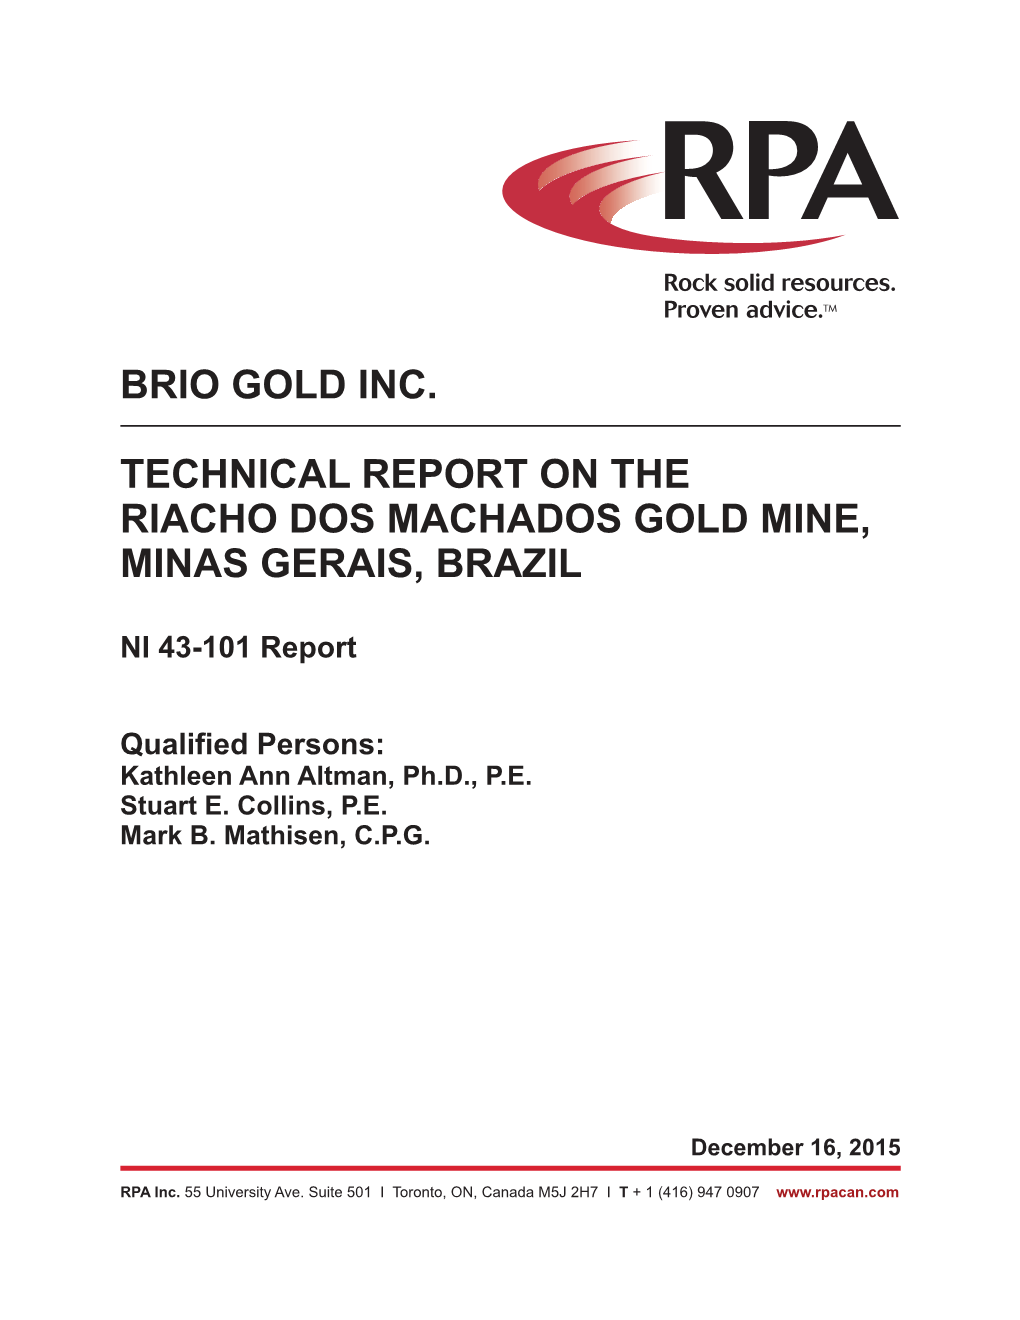 Technical Report on the Riacho Dos Machados Gold Mine, Minas Gerais, Brazil